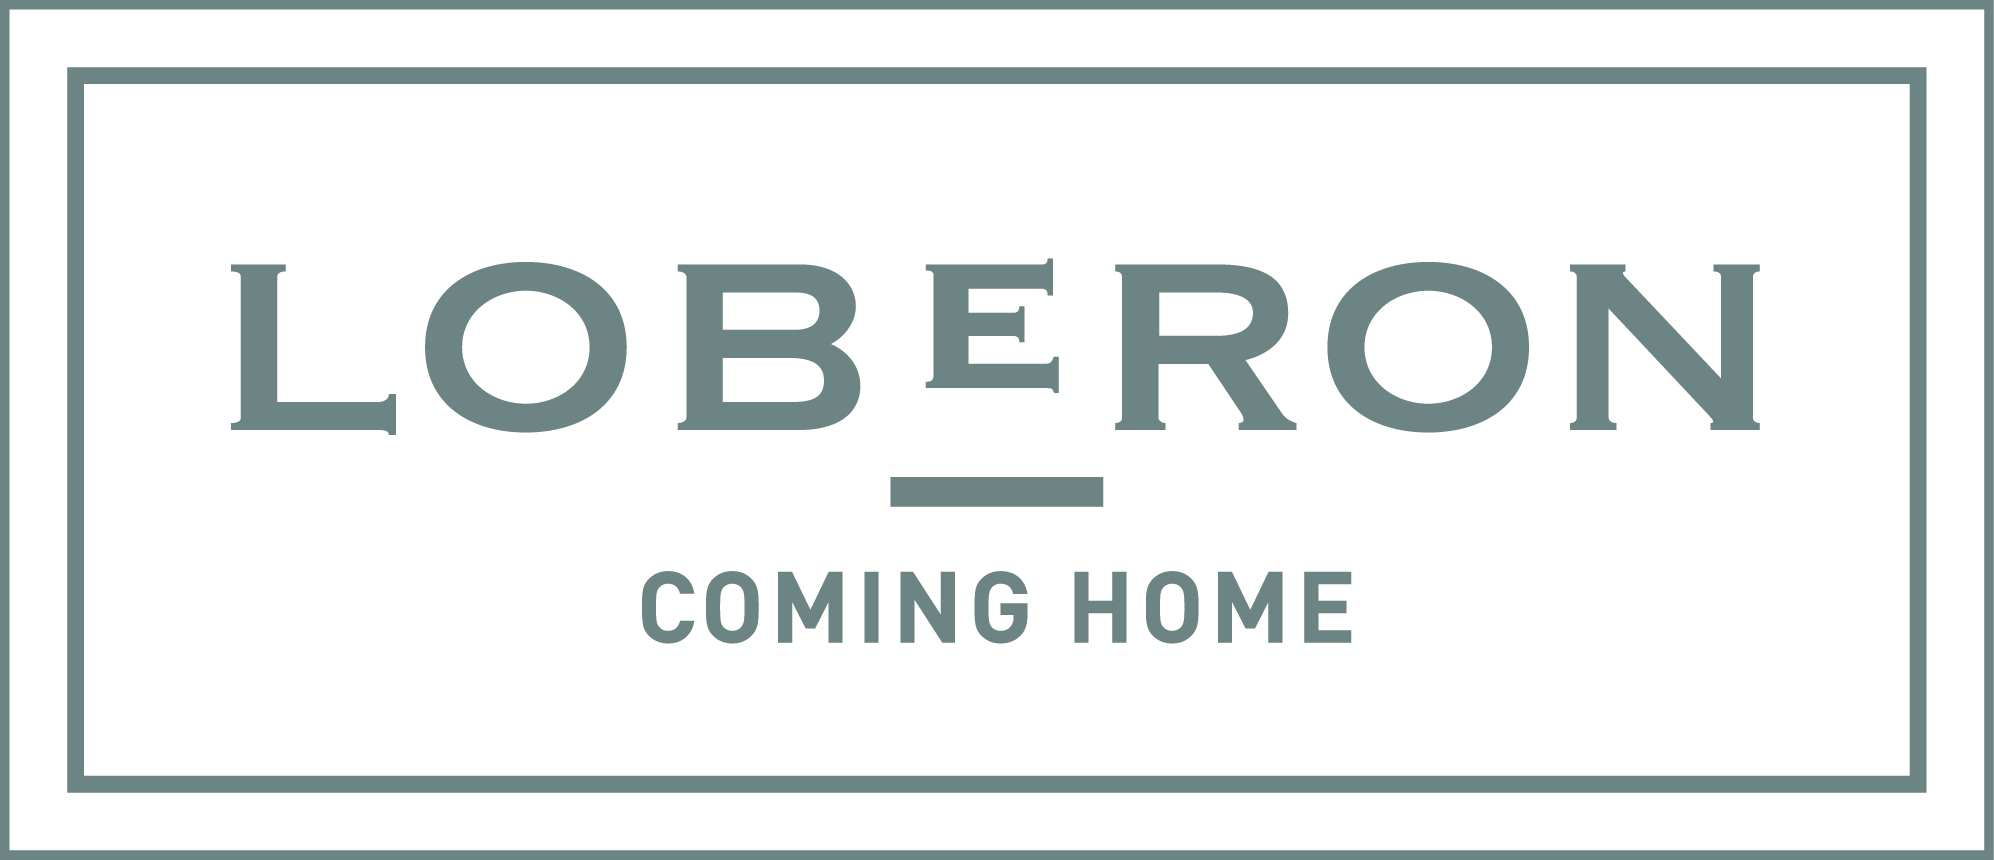 LOBERON GmbH